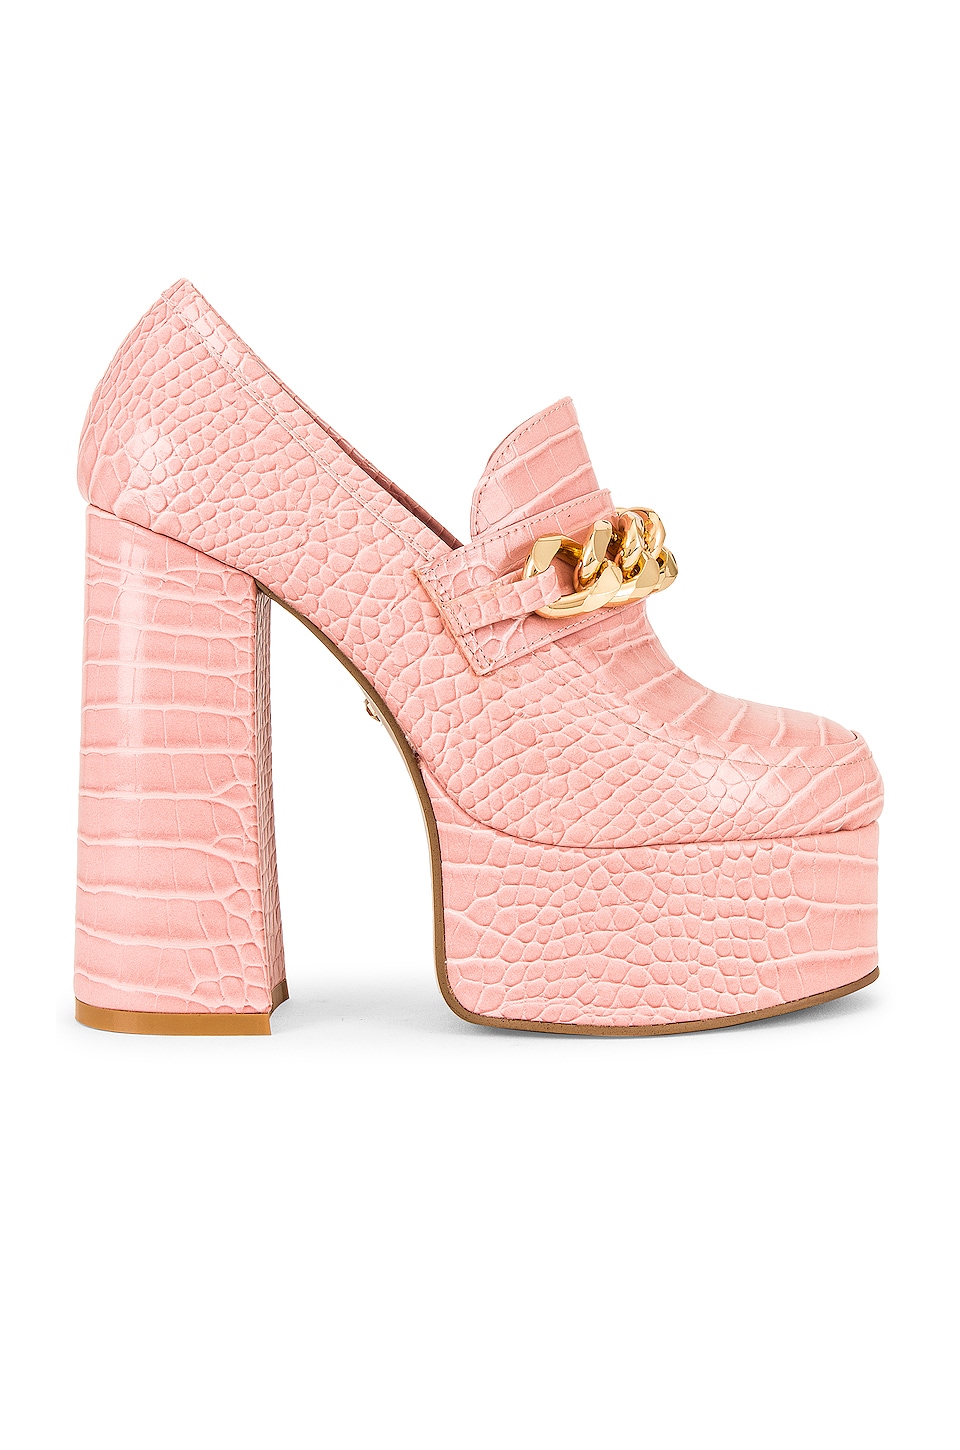 RAYE Leona Heel in Blush Pink | REVOLVE